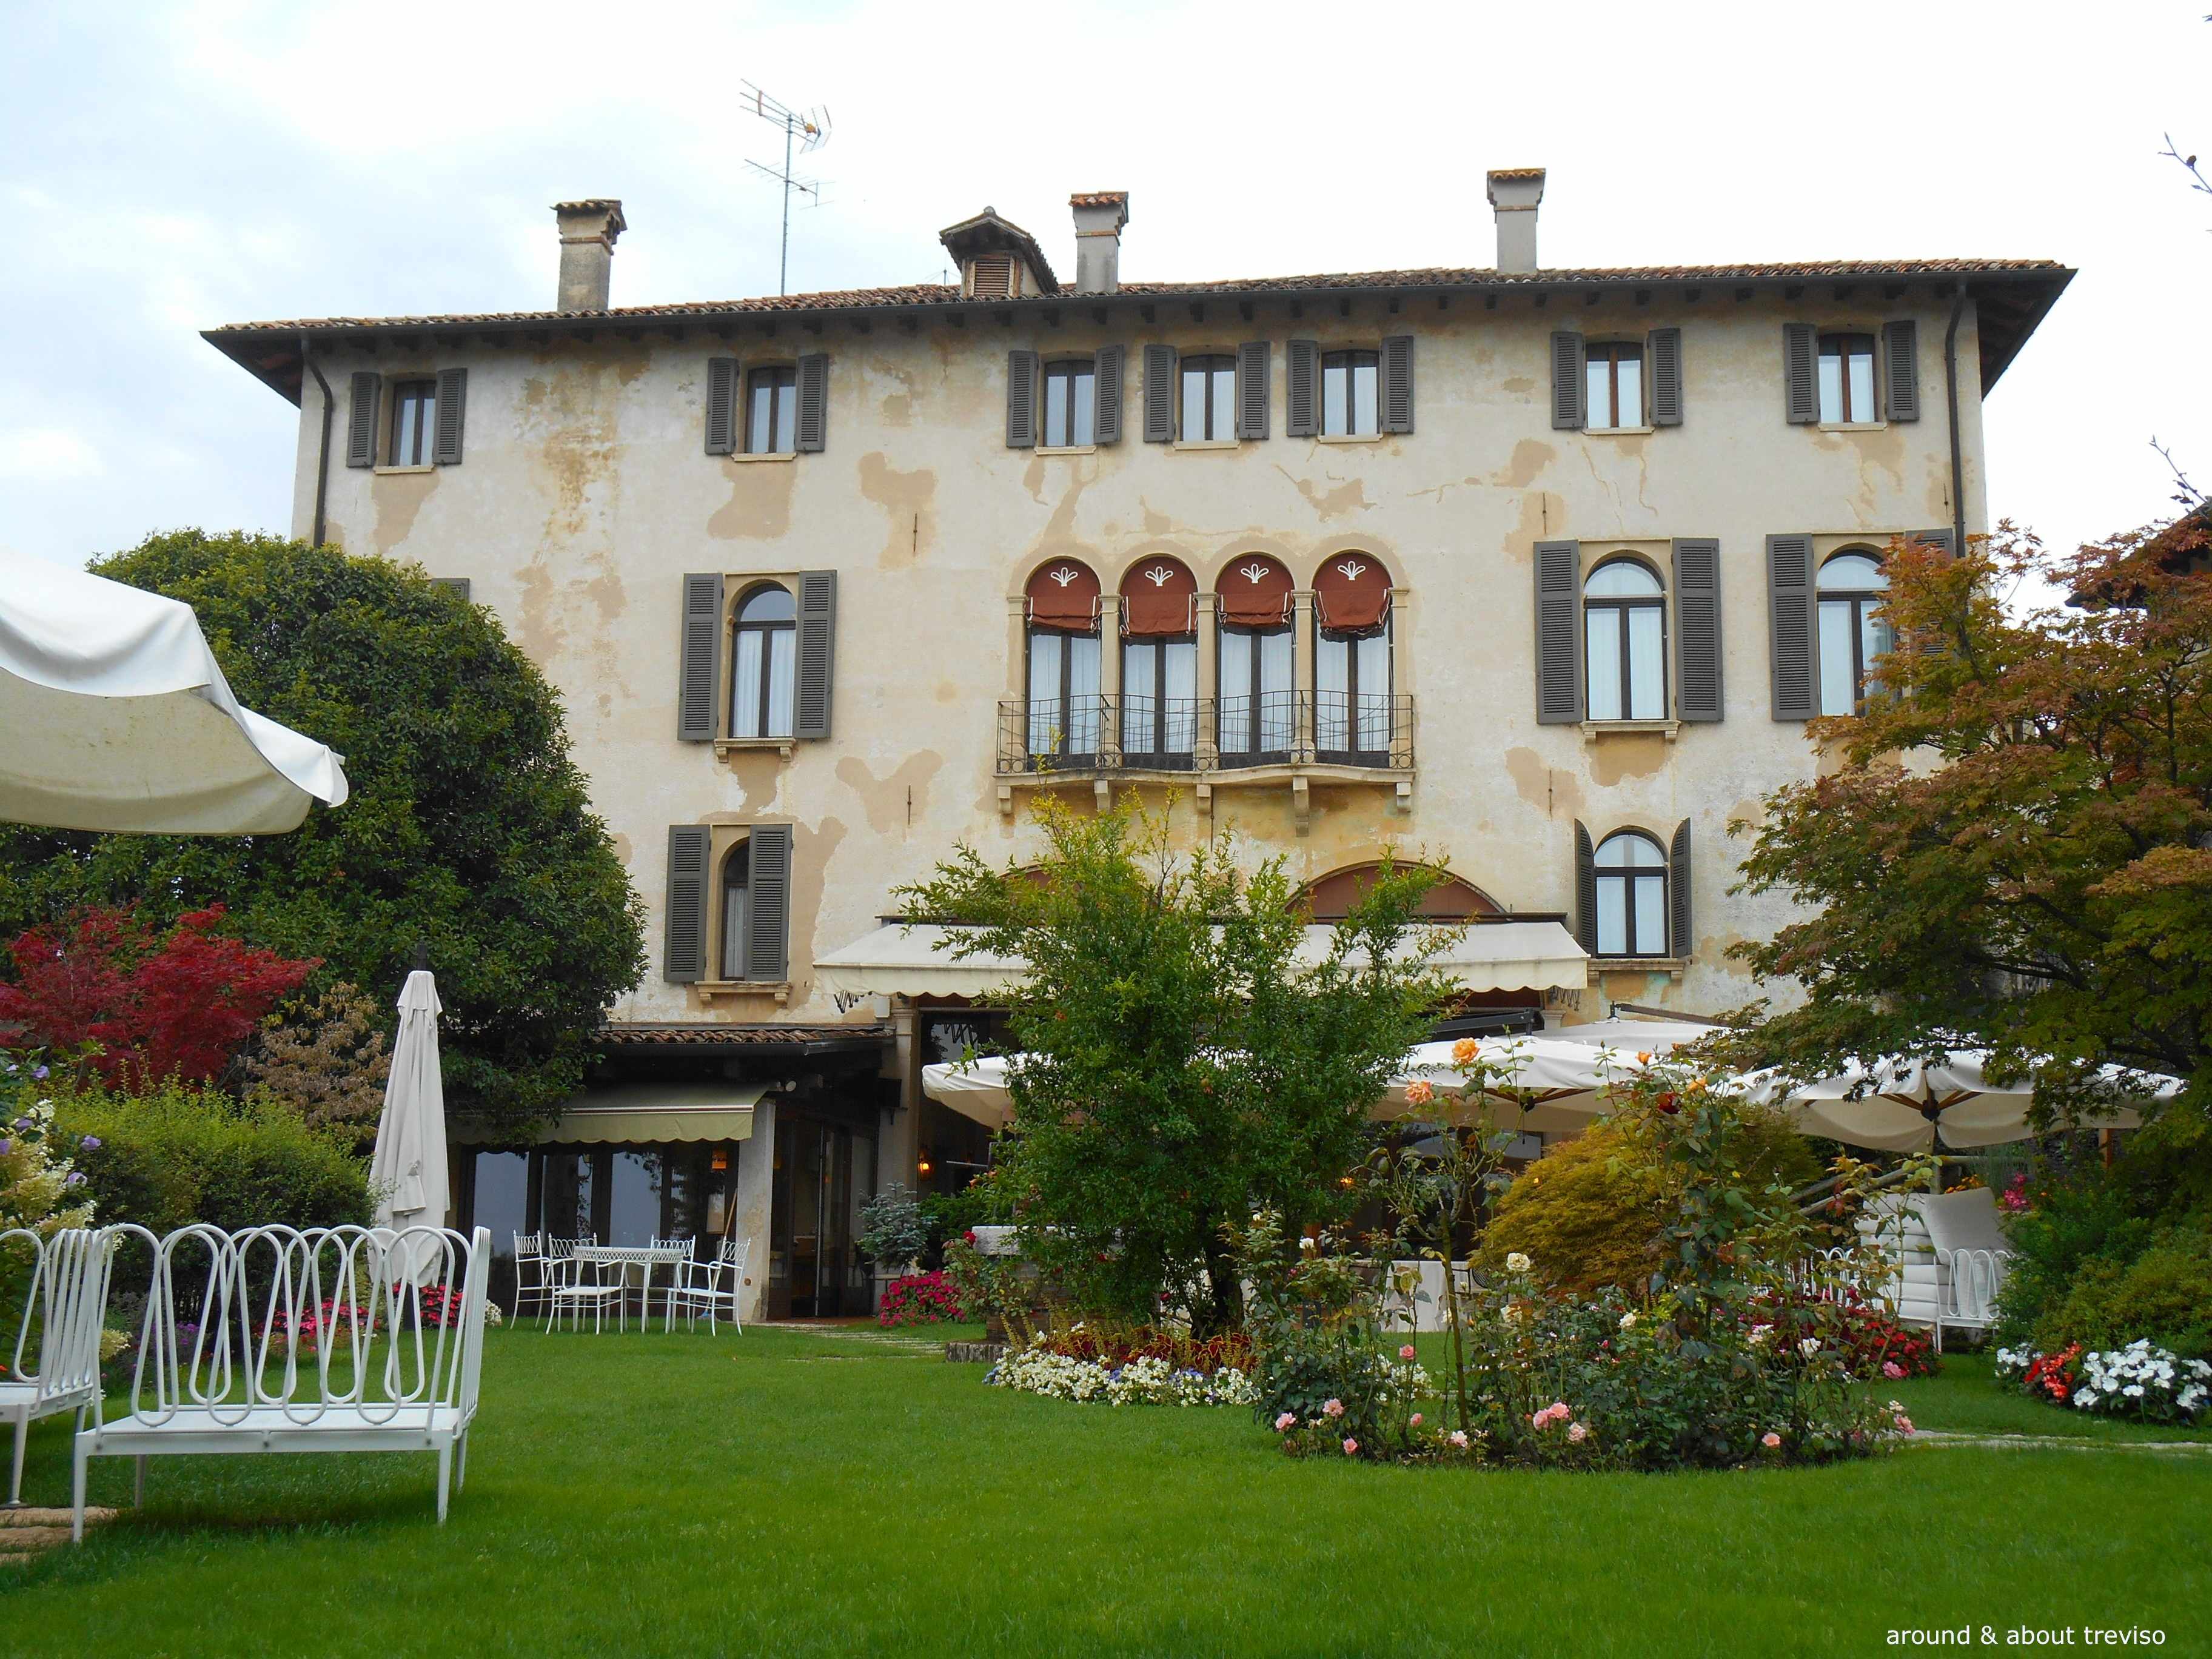 Hotel Villa Cipriani Archives - Around & About Treviso